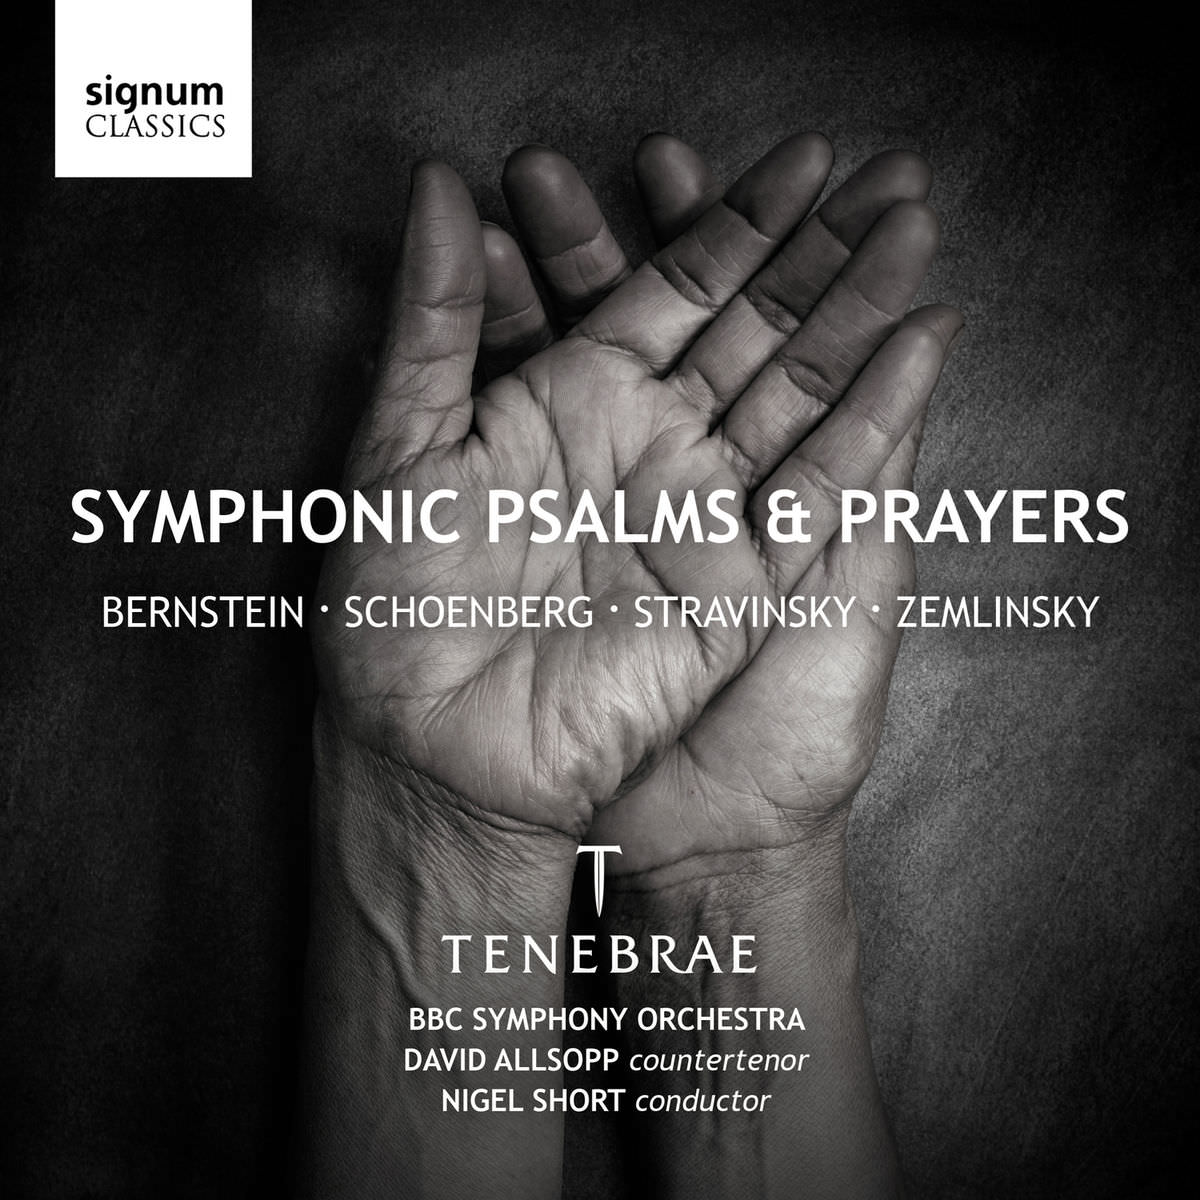 Tenebrae, BBC Symphony Orchestra & Nigel Short - Symphonic Psalms & Prayers (2018) [FLAC 24bit/96kHz]